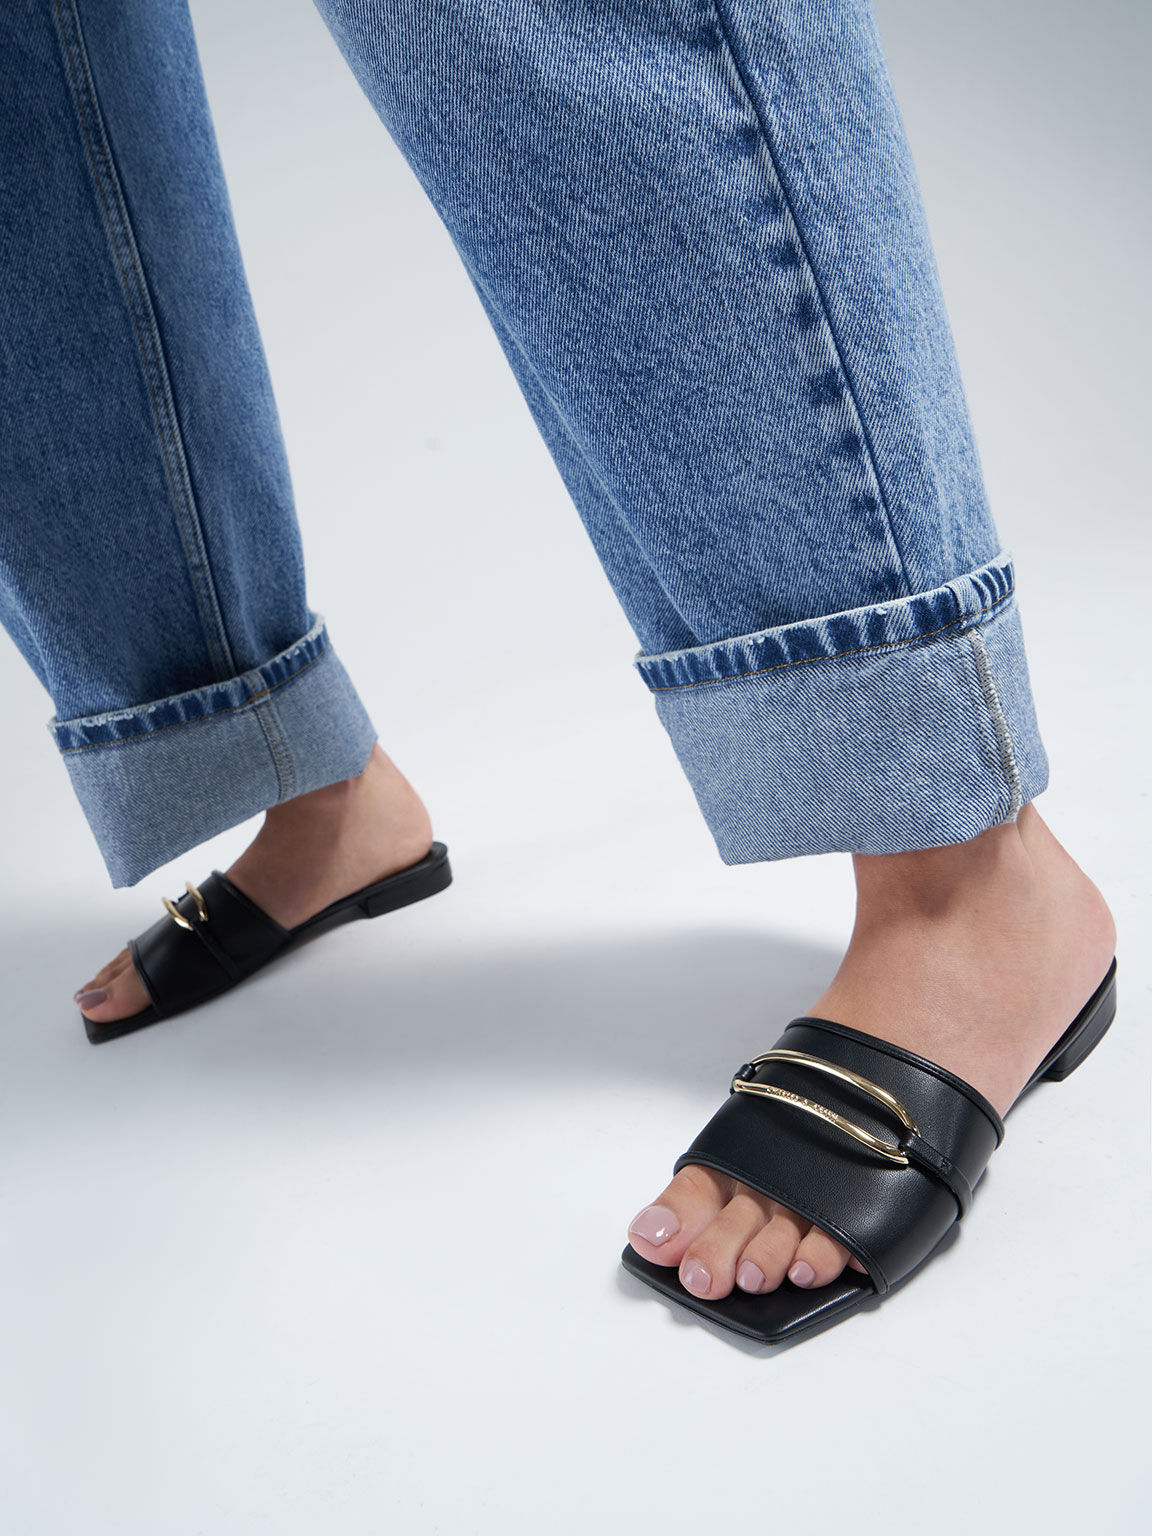 Metallic Accent Square-Toe Slide Sandals, Black, hi-res